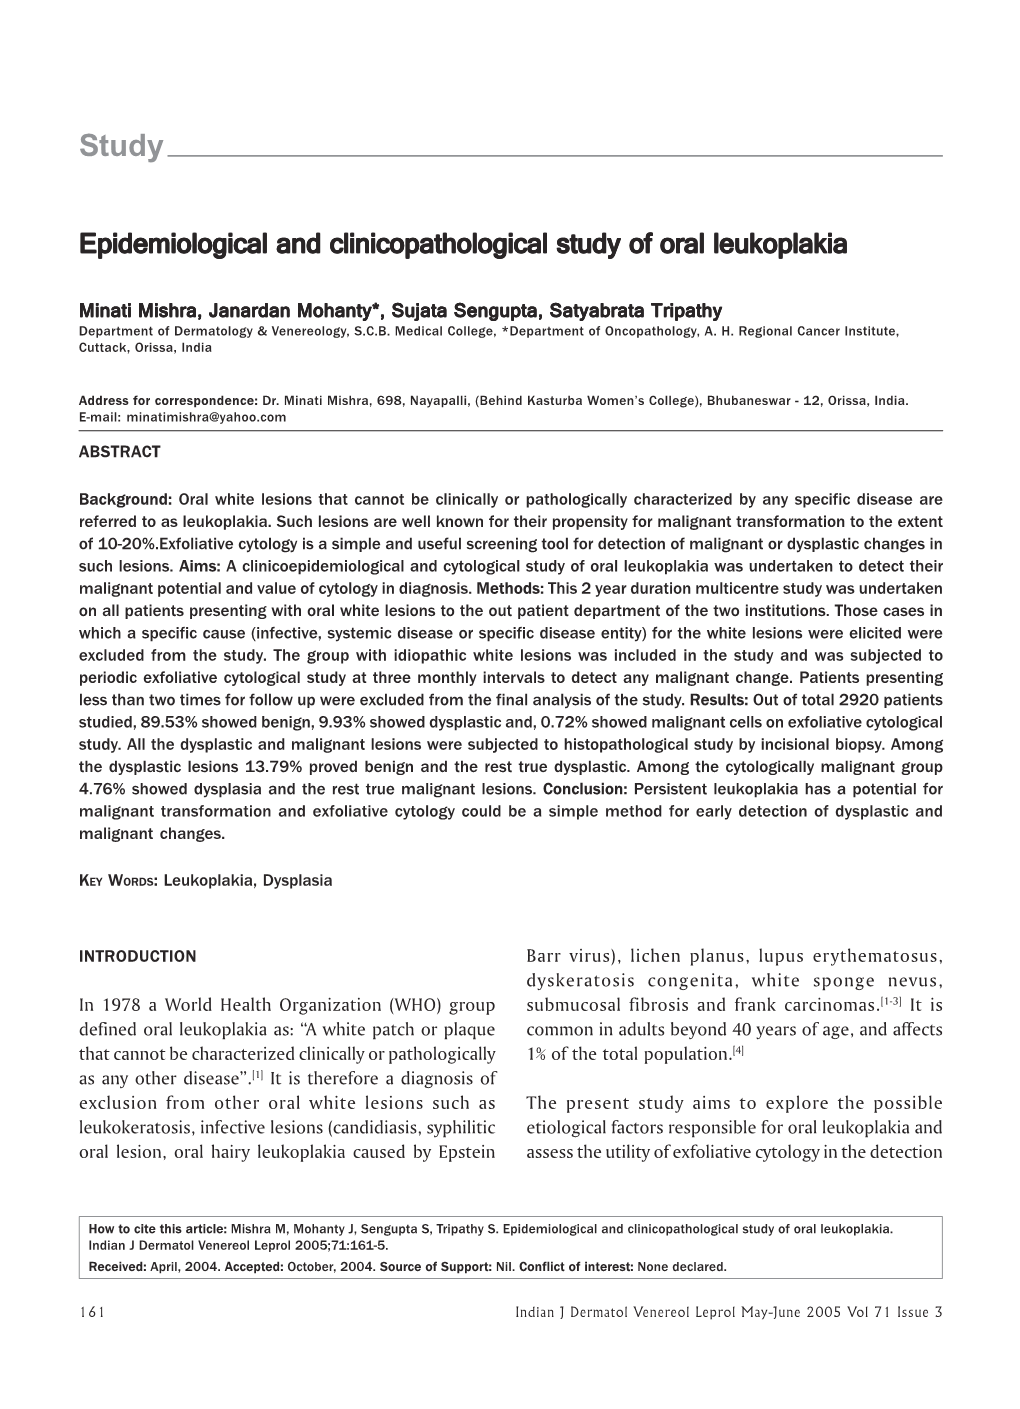 Epidemiological and Clinicopathological Study of Oral Leukoplakia